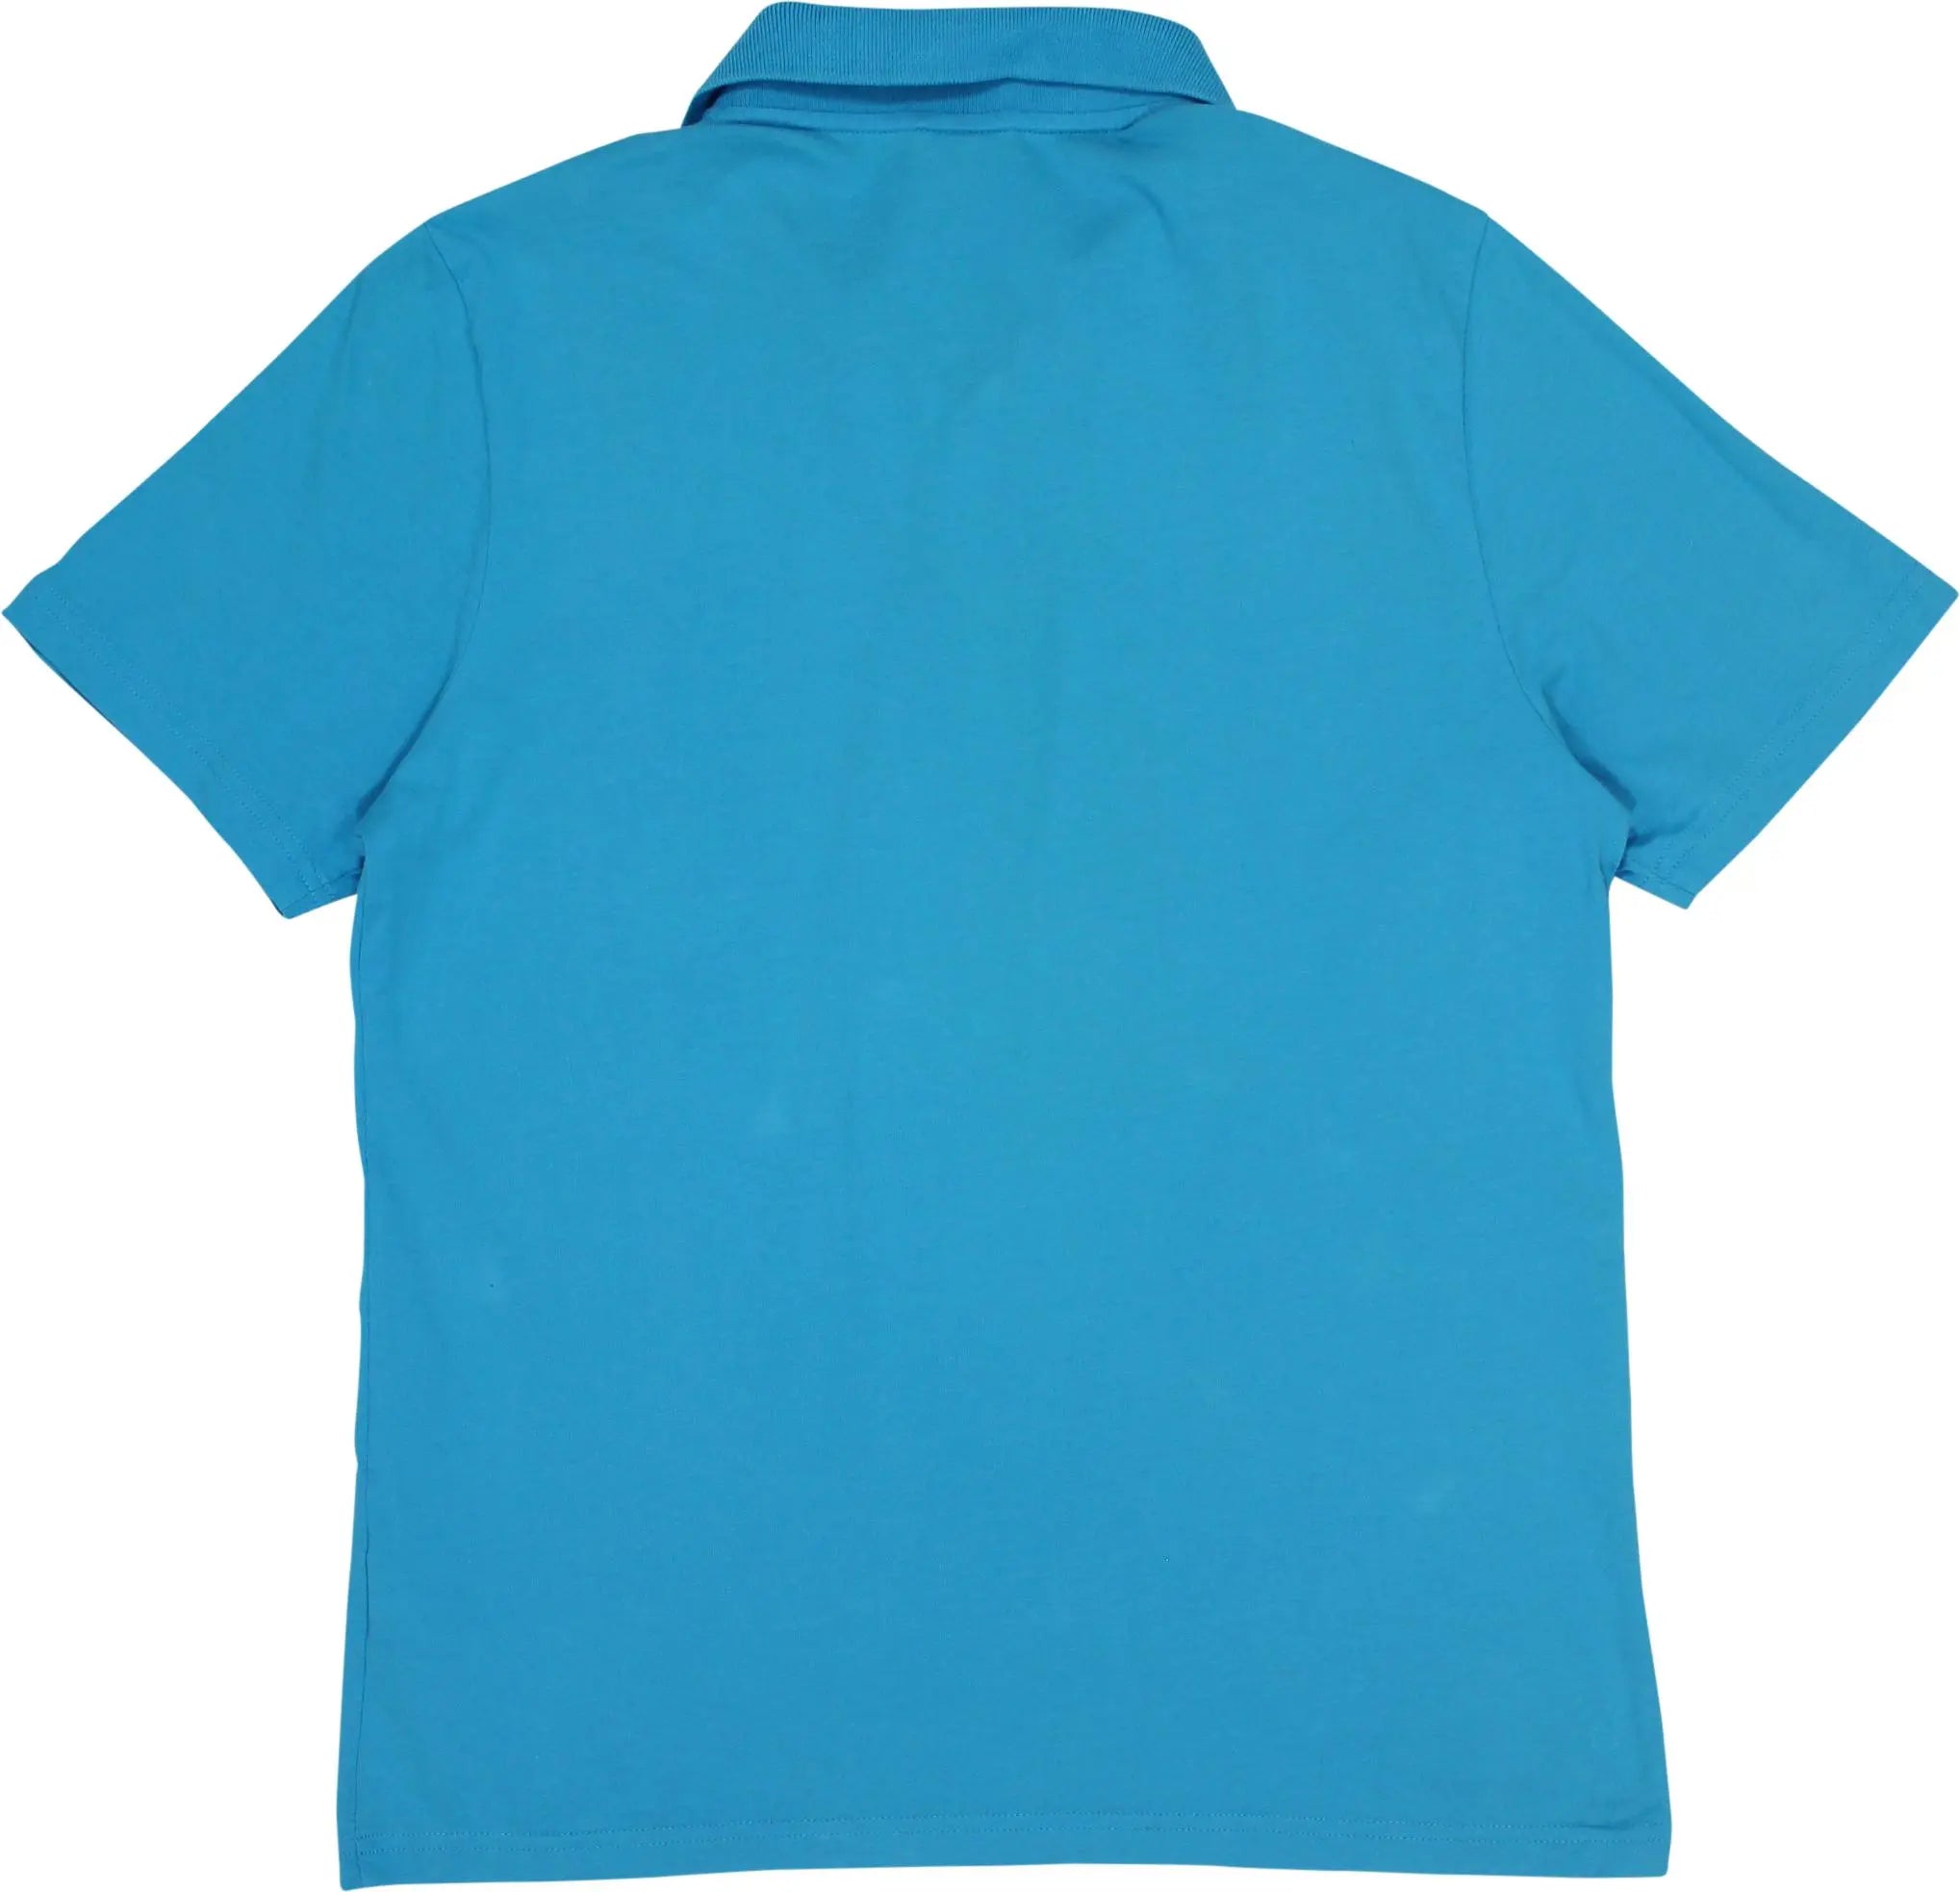 Puma - Blue Polo Shirt by Puma- ThriftTale.com - Vintage and second handclothing